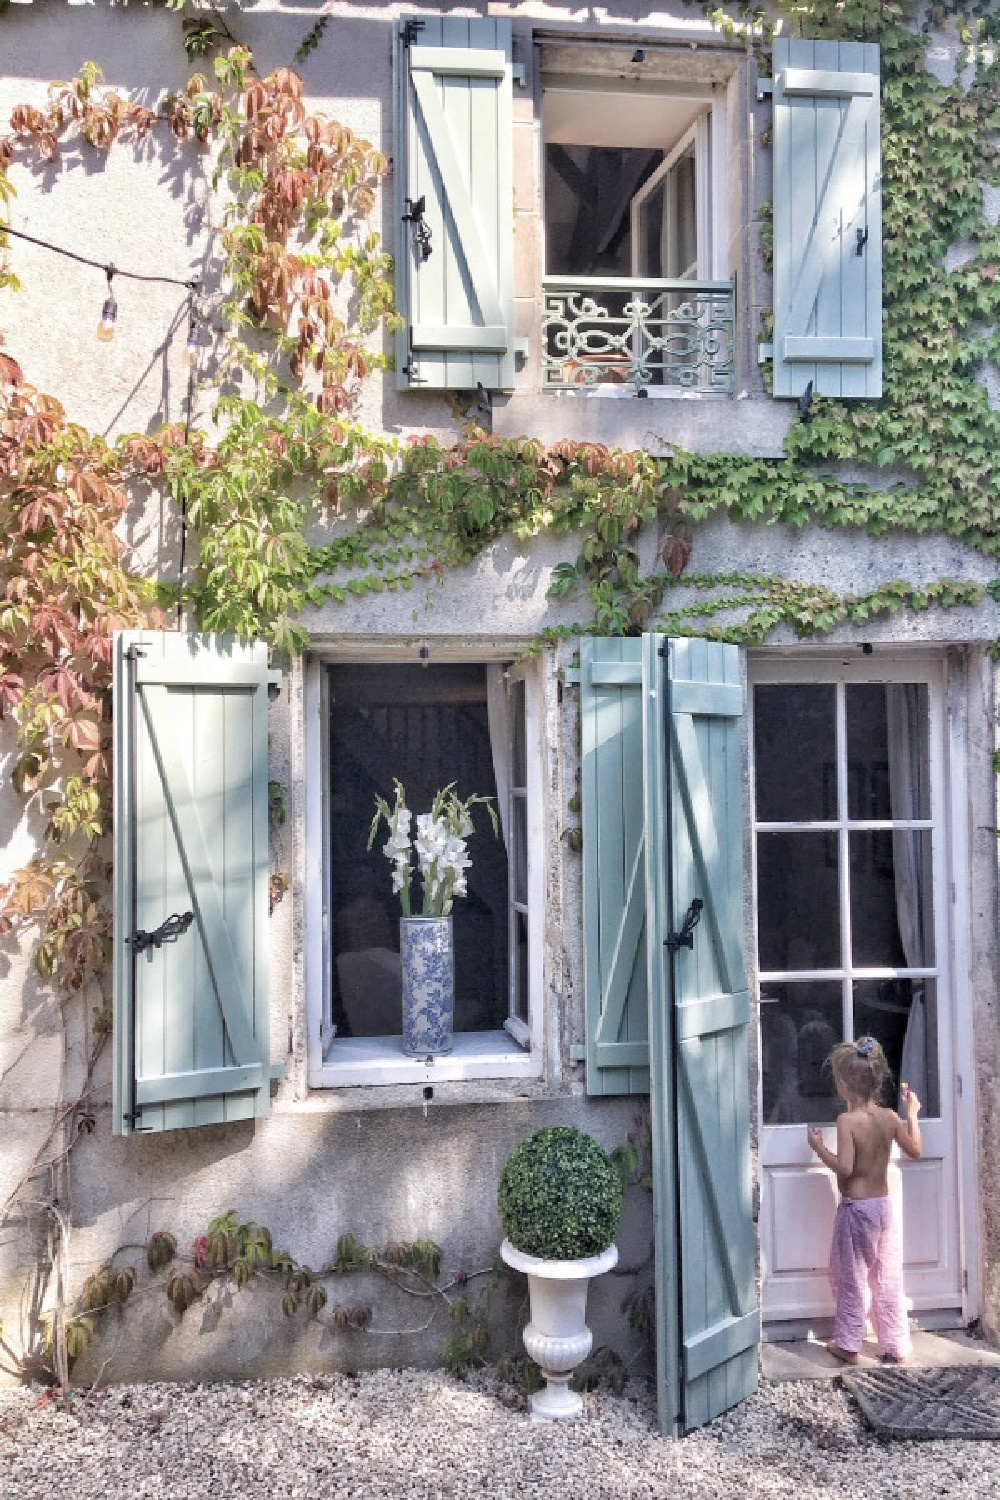 Charming shutters on a stone French farmhouse with climbing vines - Vivi et Margot. #frenchfarmhouse #shutters